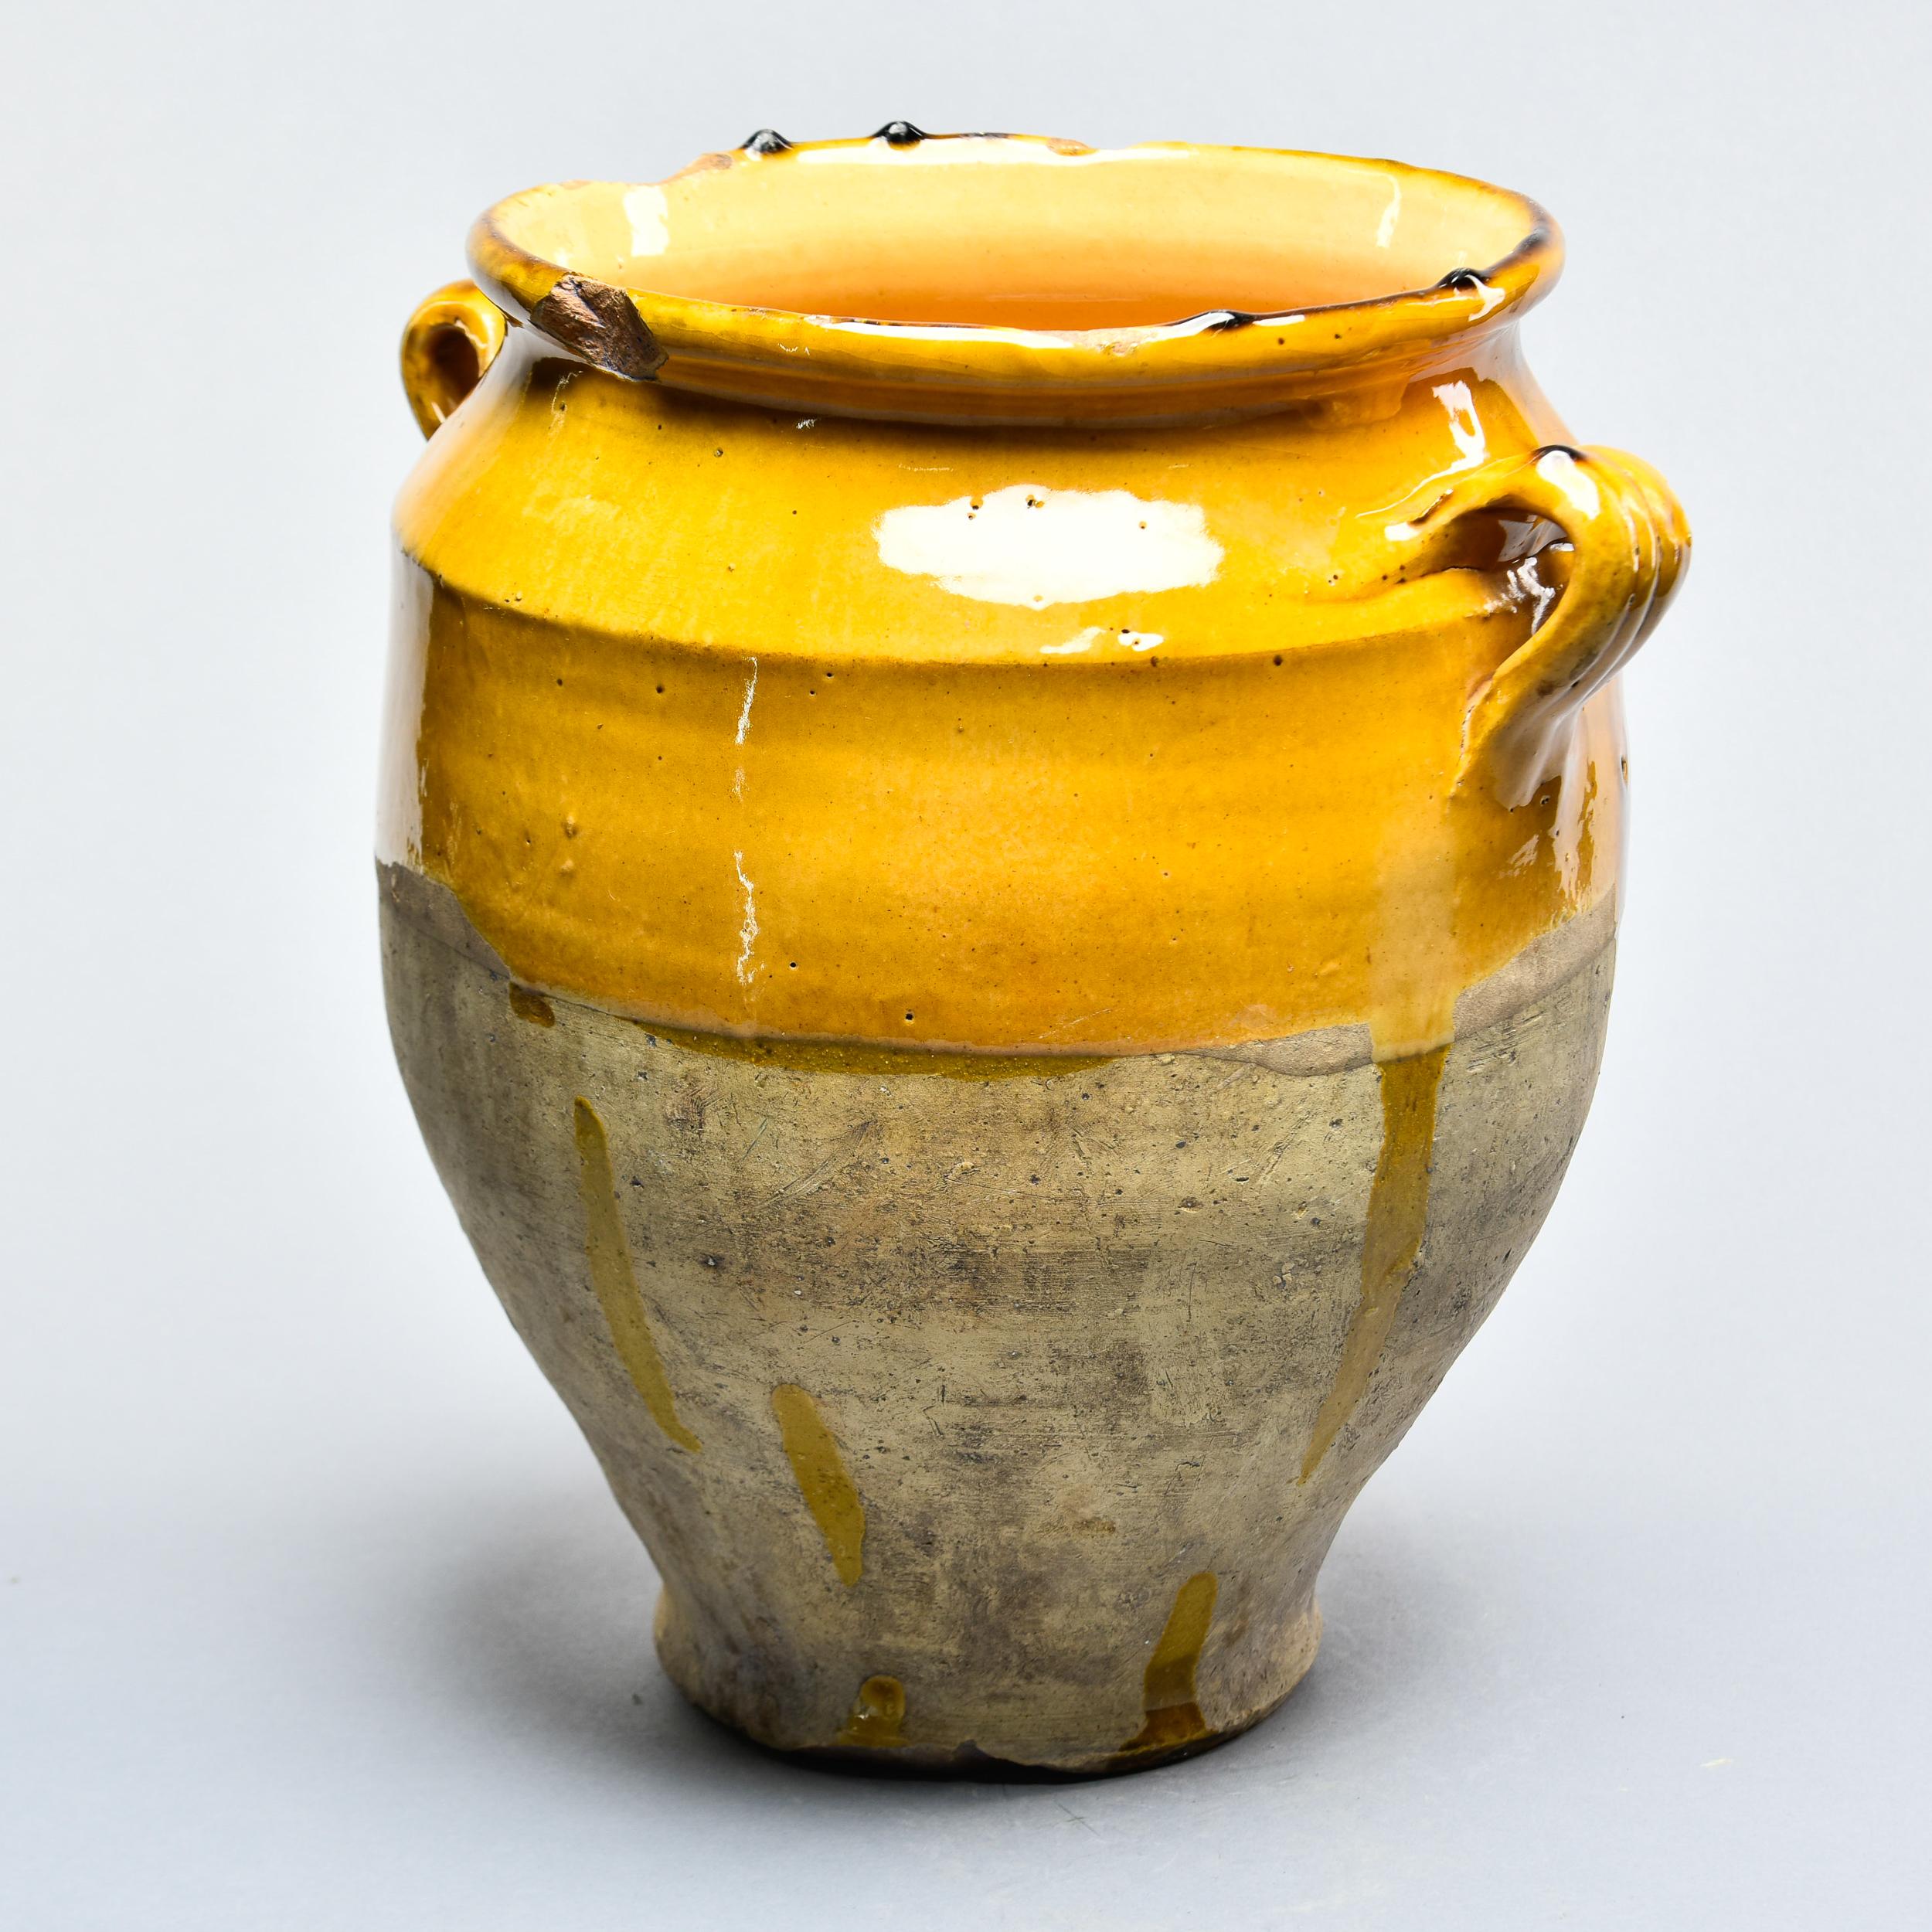 French Provincial French Mustard Glazed Confit Jar with Dark Streaks